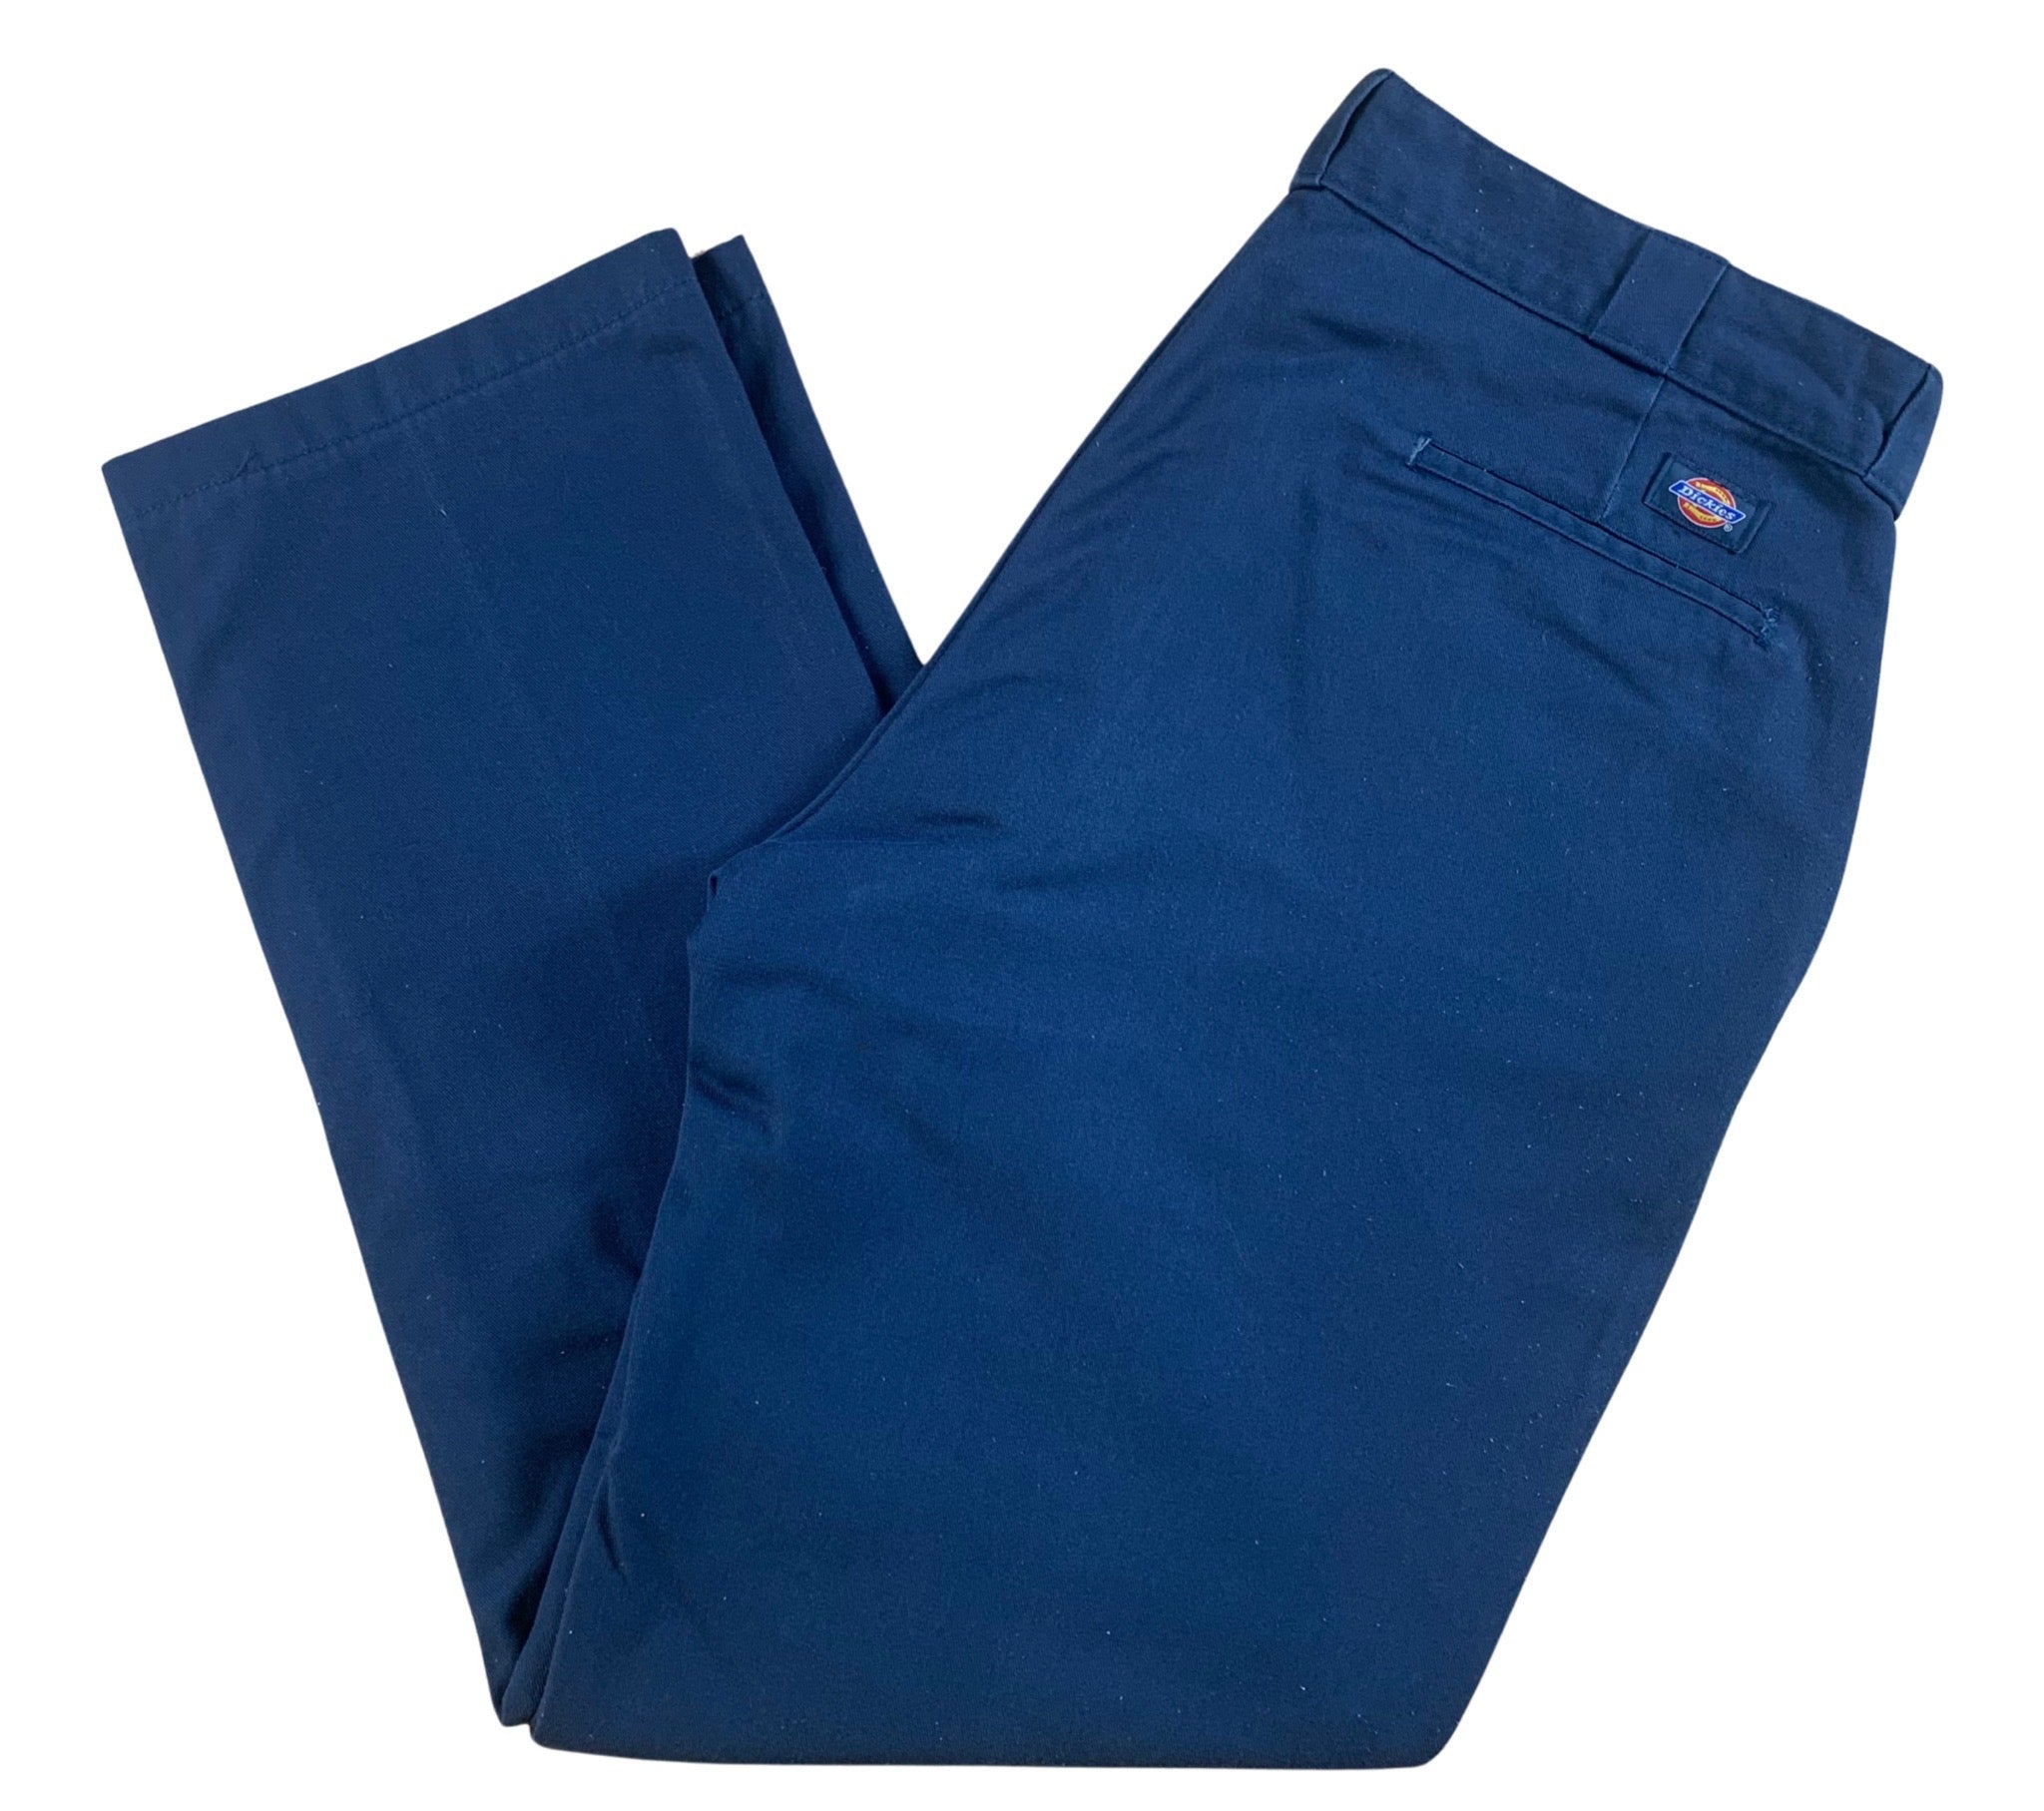 1x Vintage DICKIES Navy Blue Straight Leg Trousers - Waist 46 - Length 30 - Vintage Superstore Online